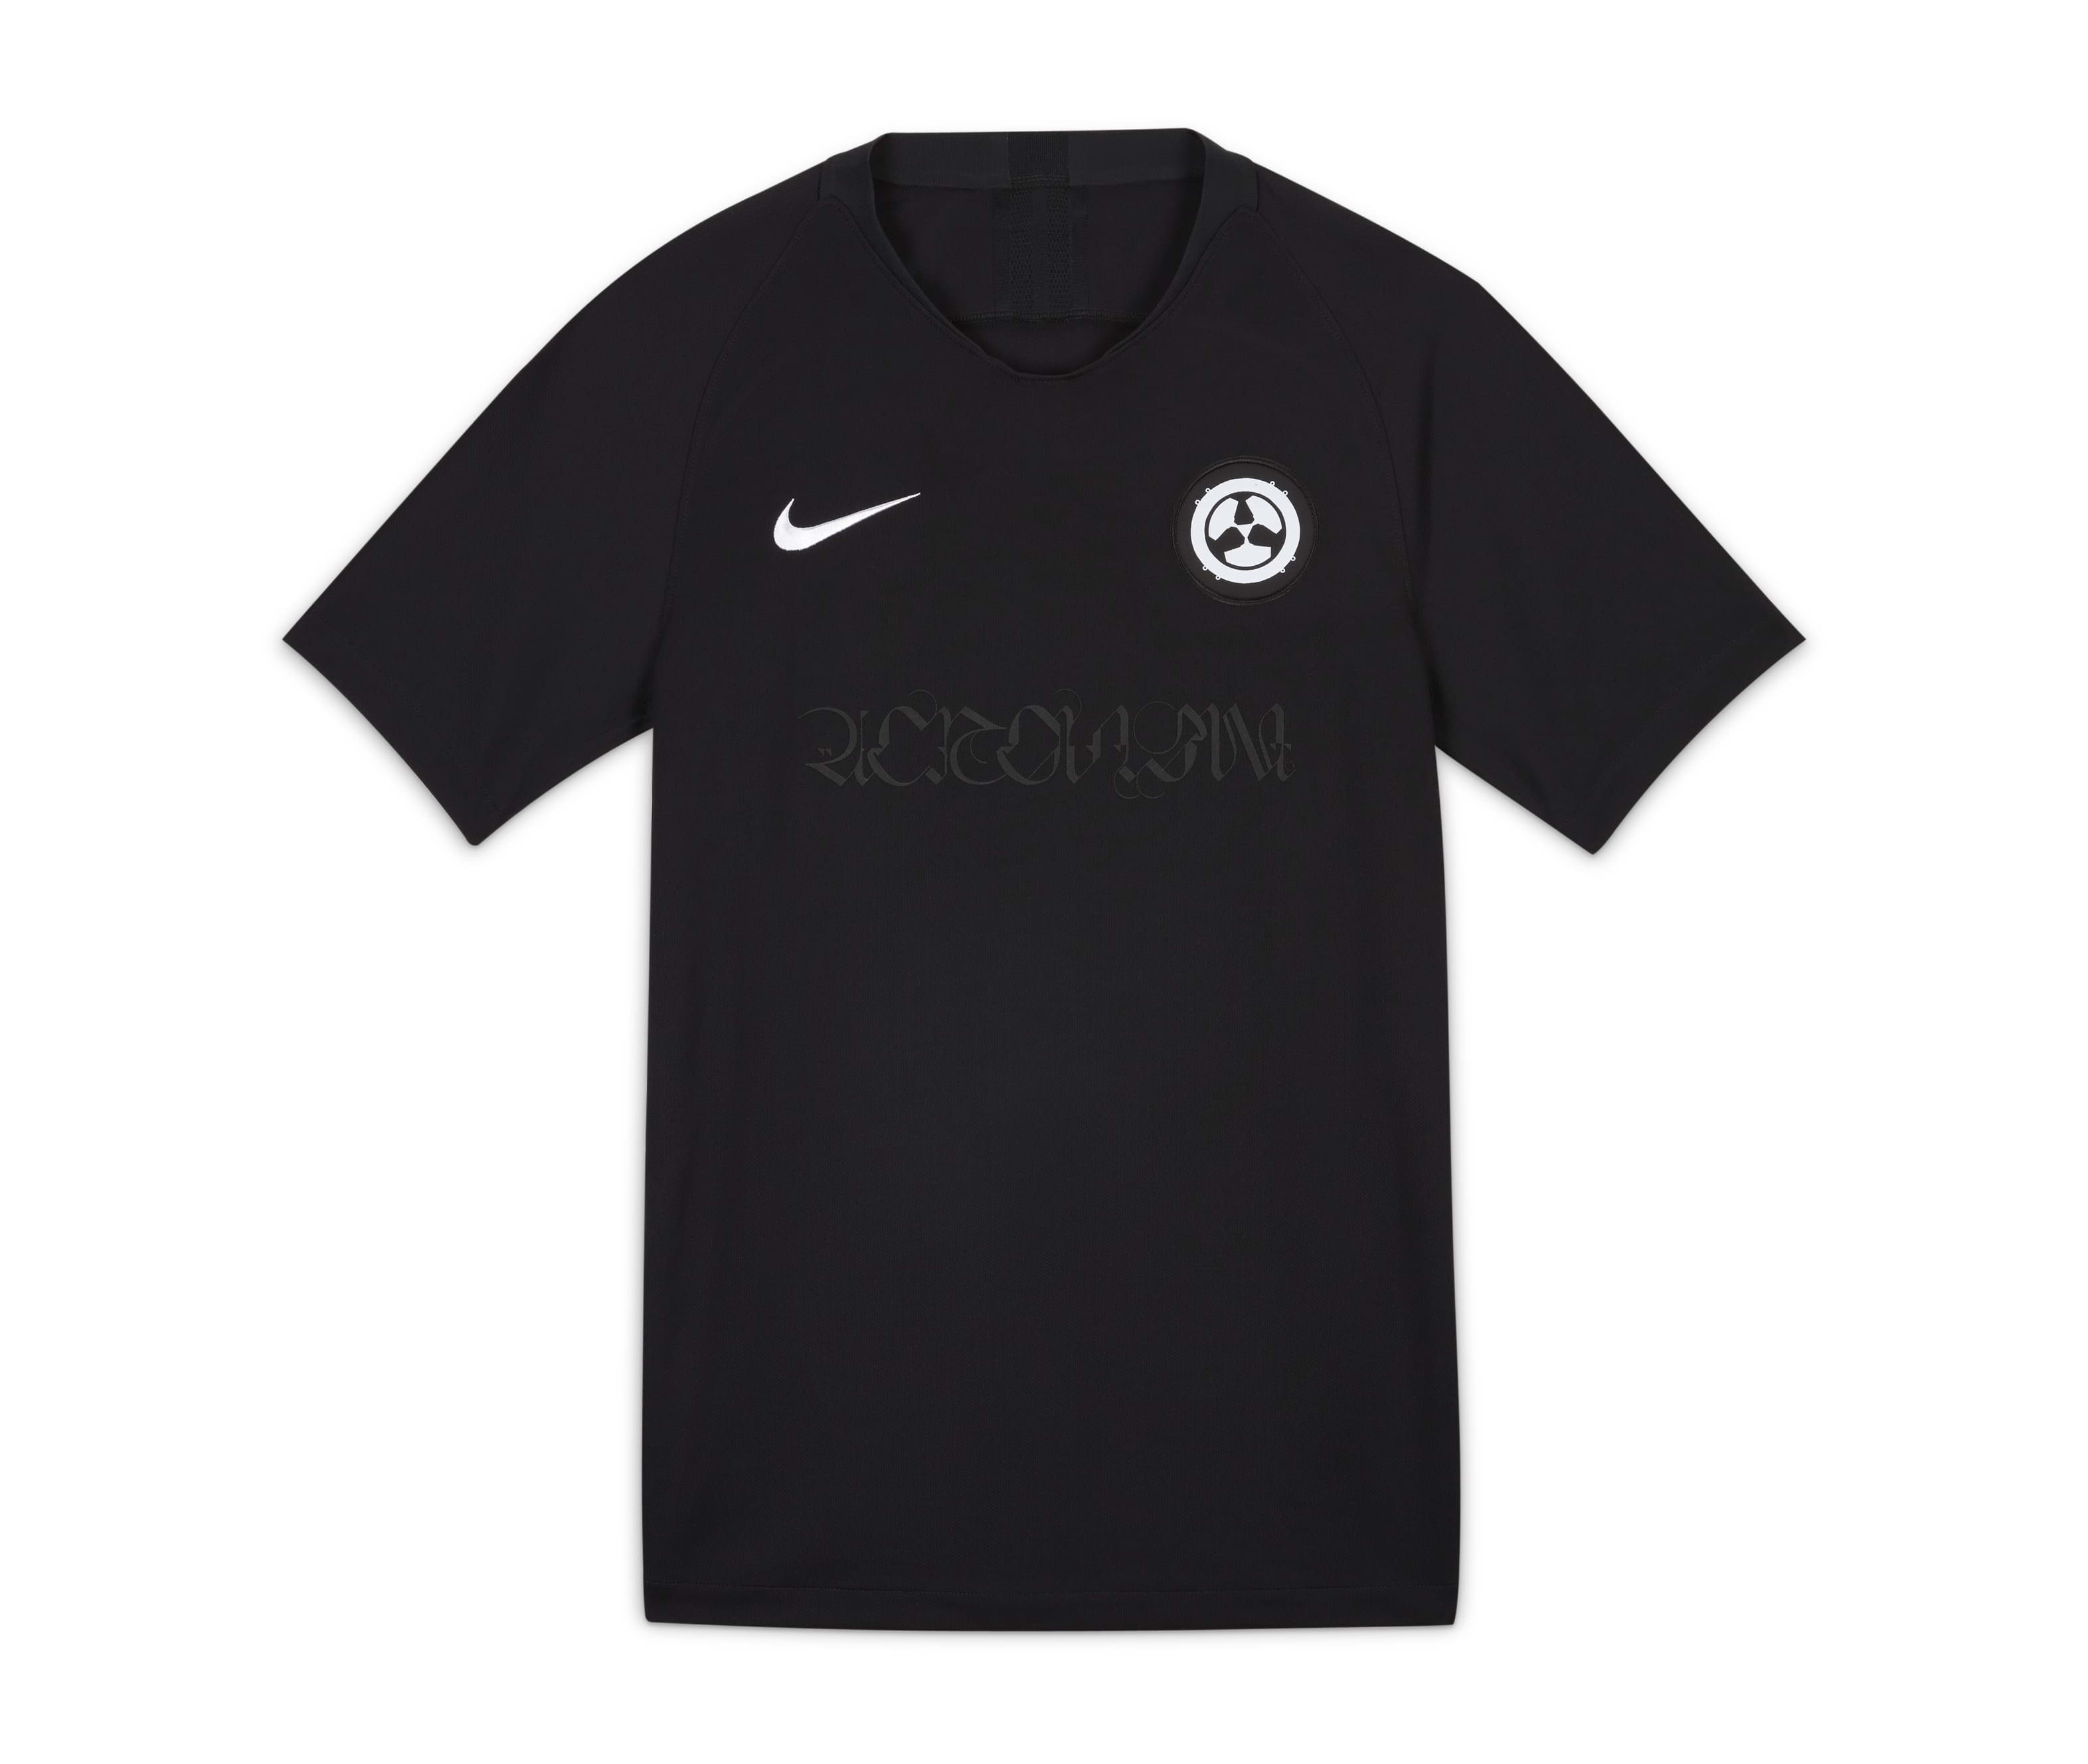 Acronym x Nike Stadium Jersey (Black)